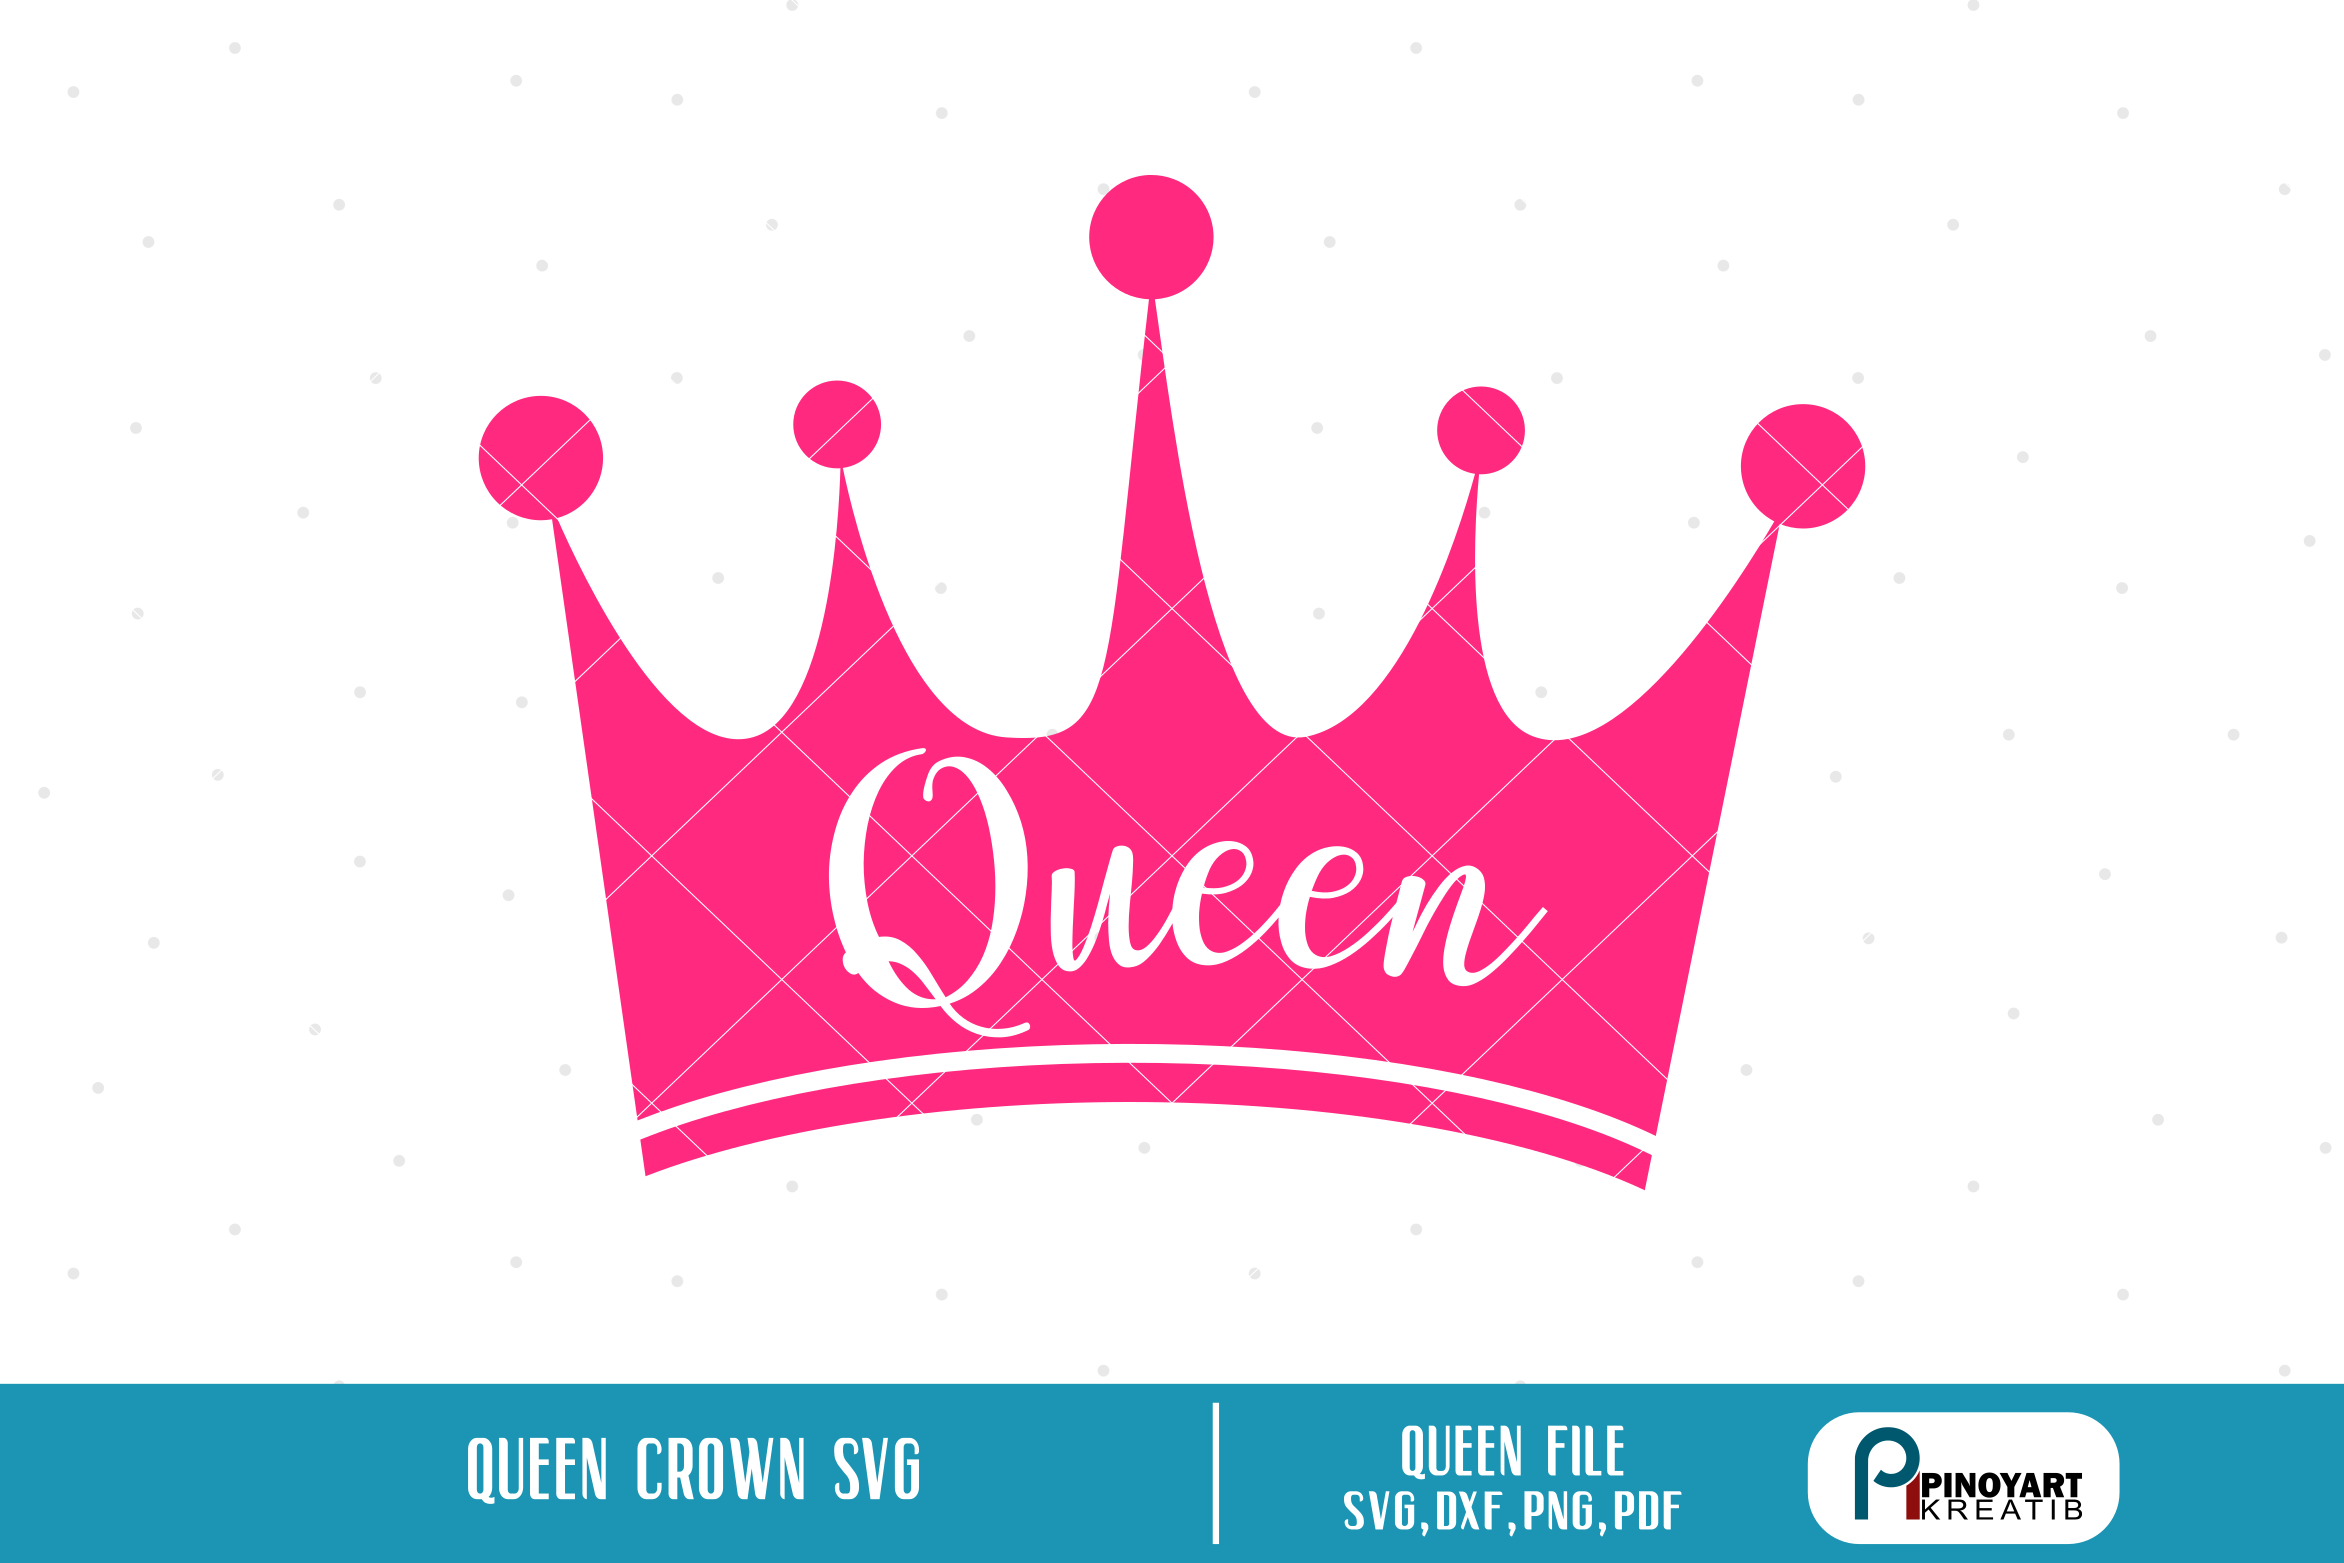 Download crown svg,crown svg file,crown dxf file,queen svg,queen svg